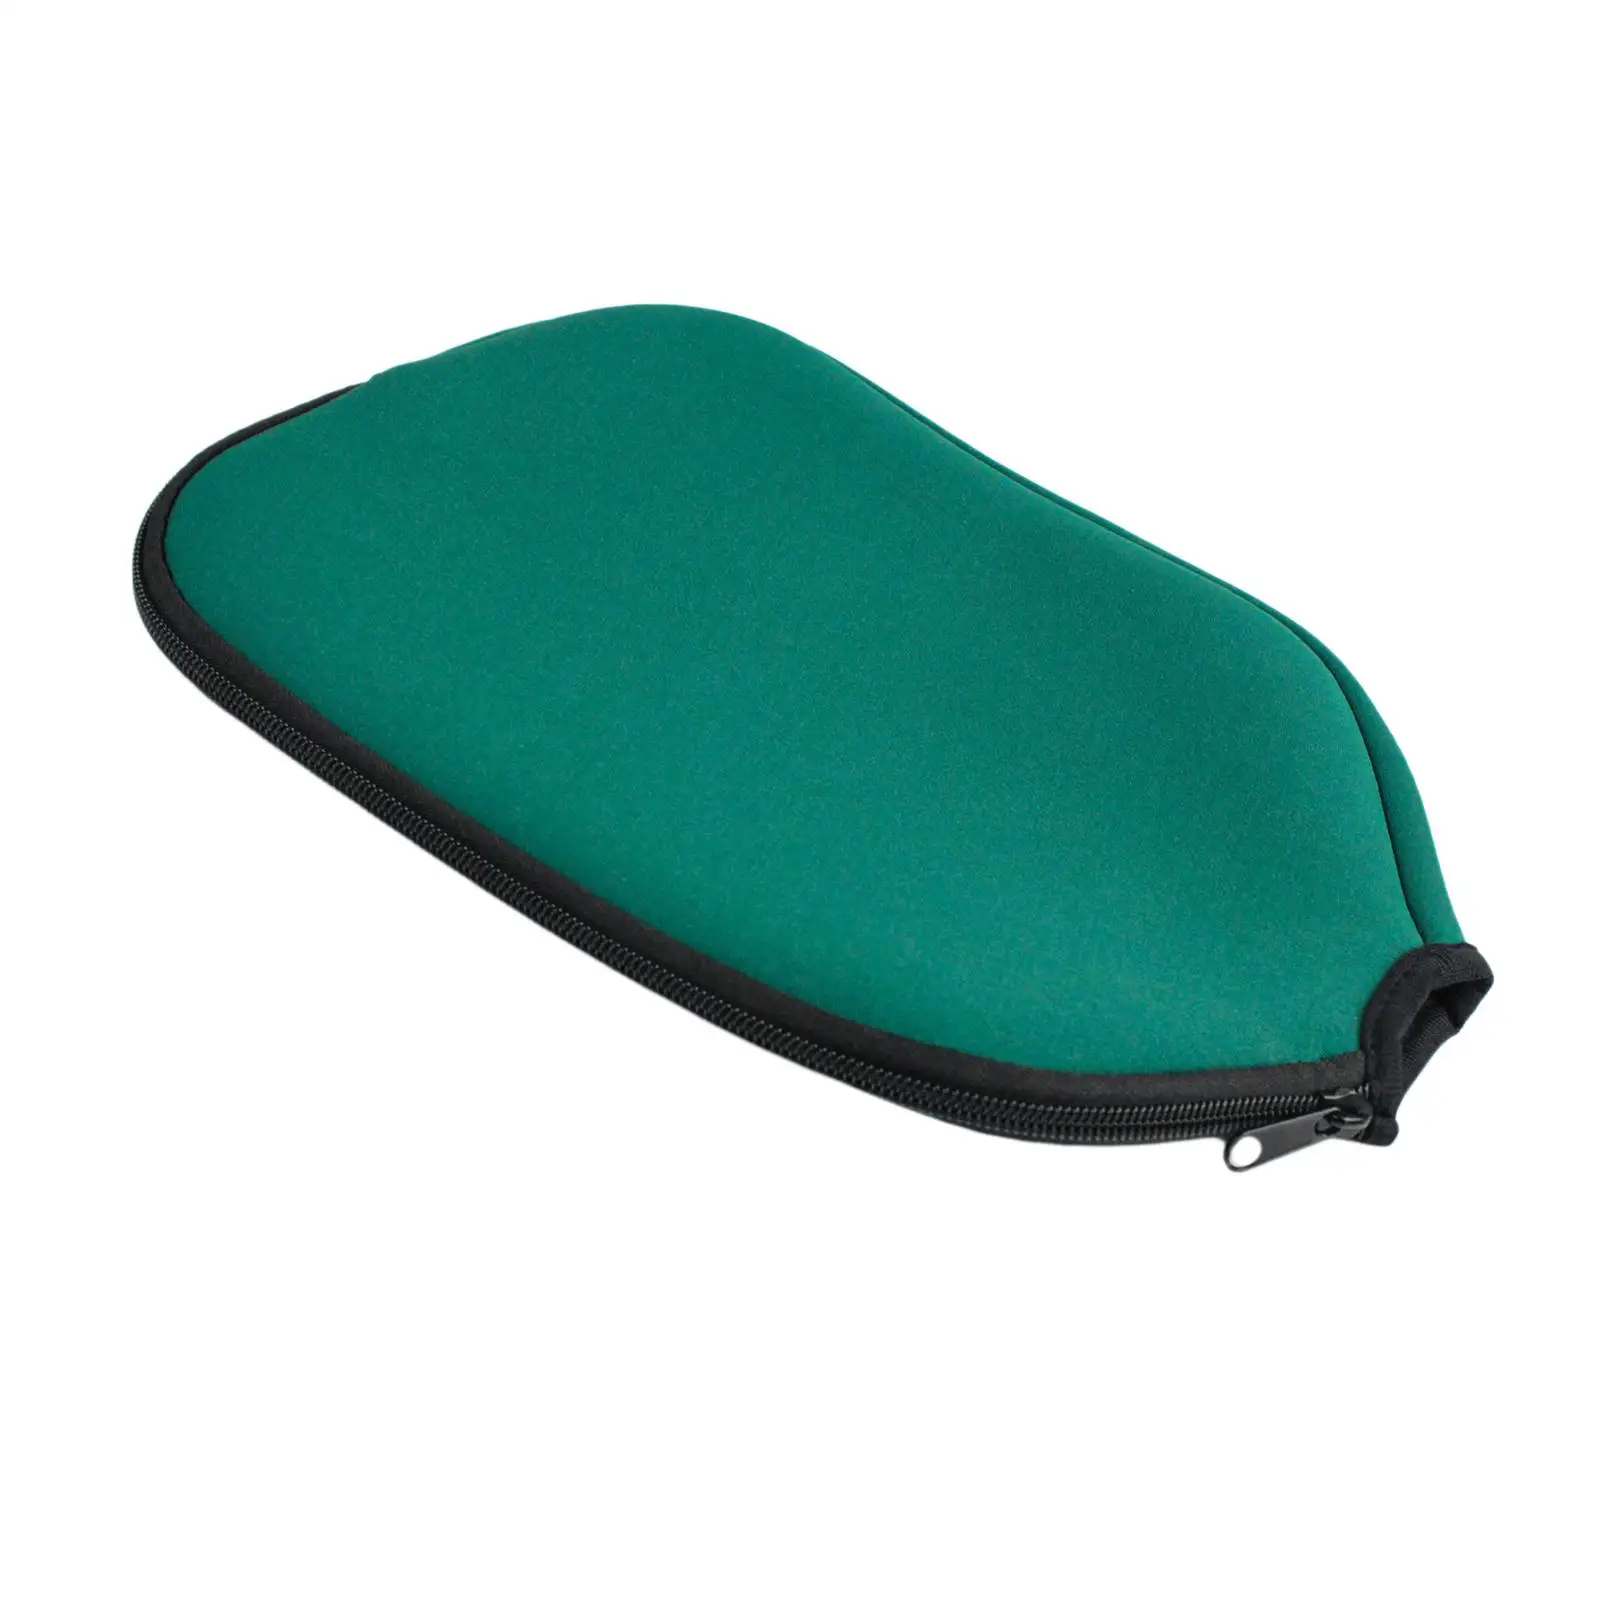 Racket Sleeve Neoprene Paddle Cover Pickleball Protection Table Tennis Paddle Case Holder Premium Pickleball Head Cover